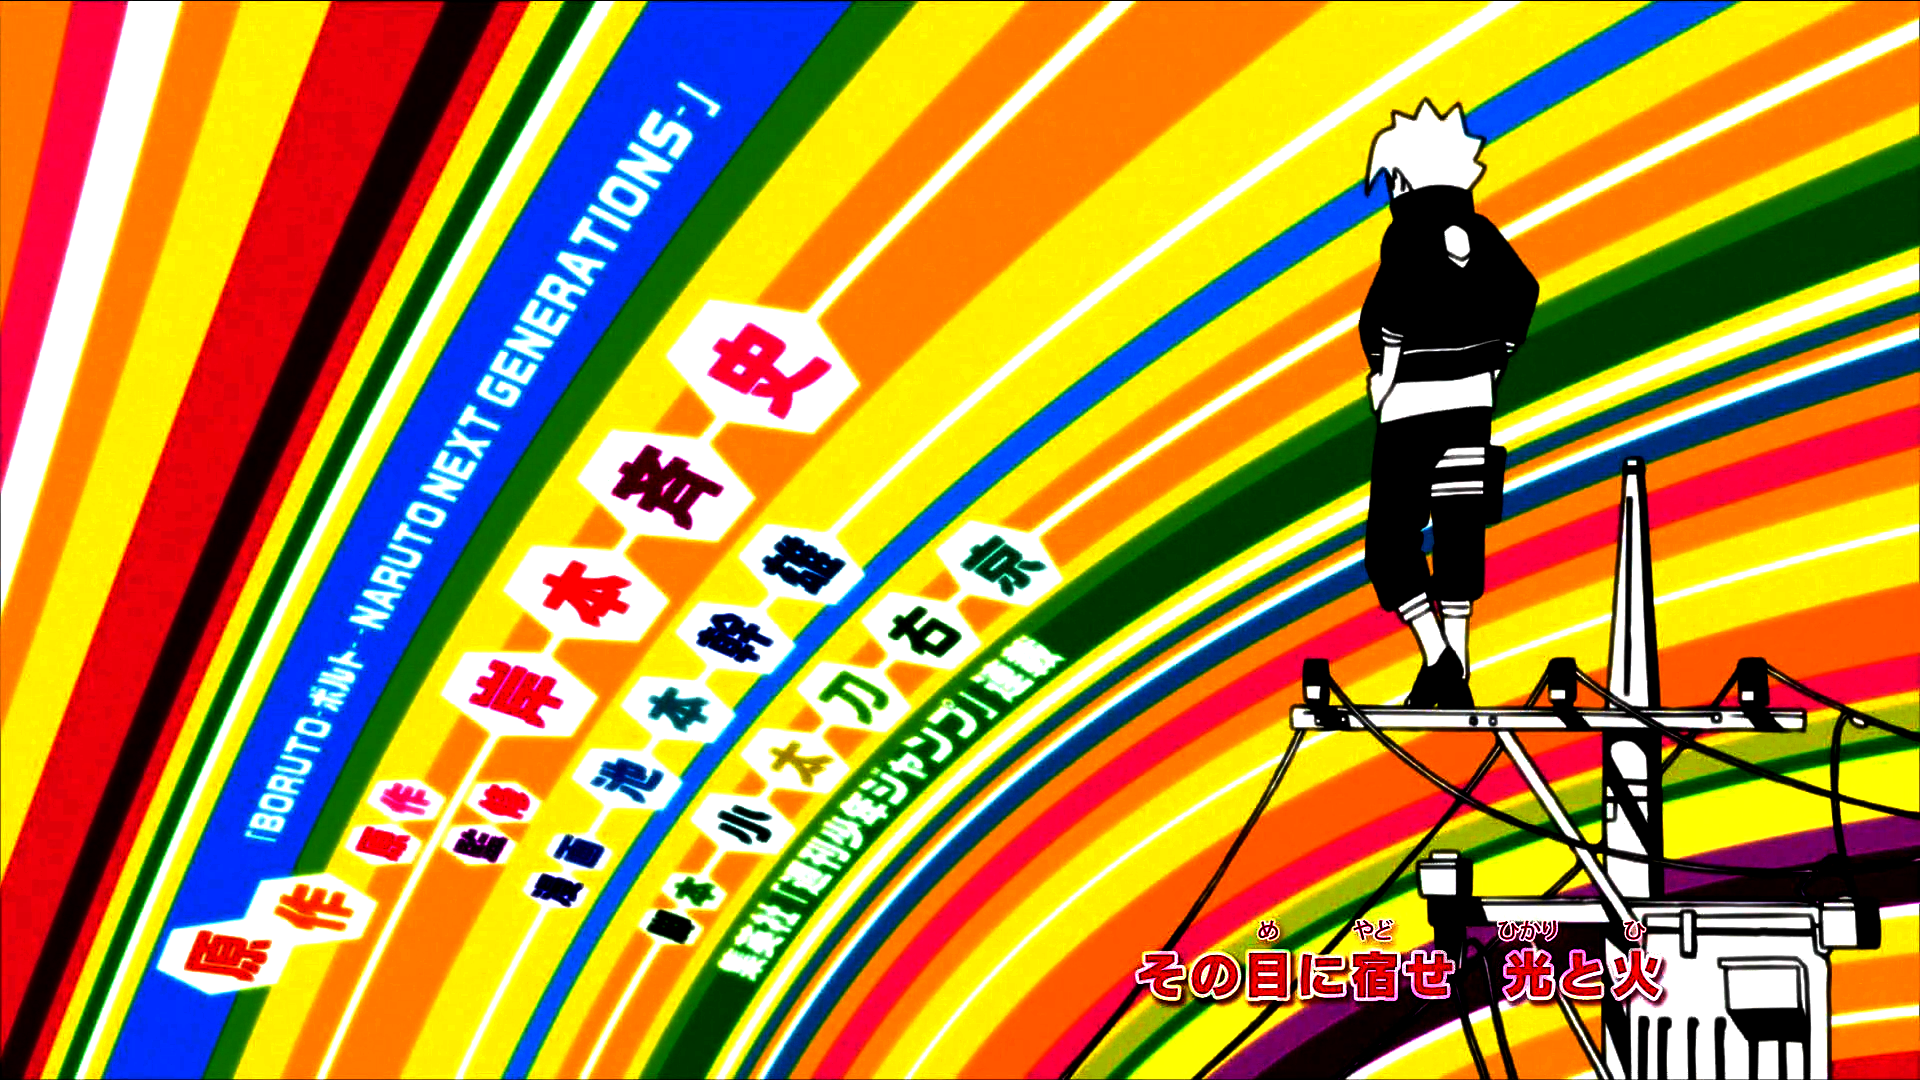 Boruto: Naruto Next Generations Wallpaper! (I made it, Just edited a screen cap in photohop)